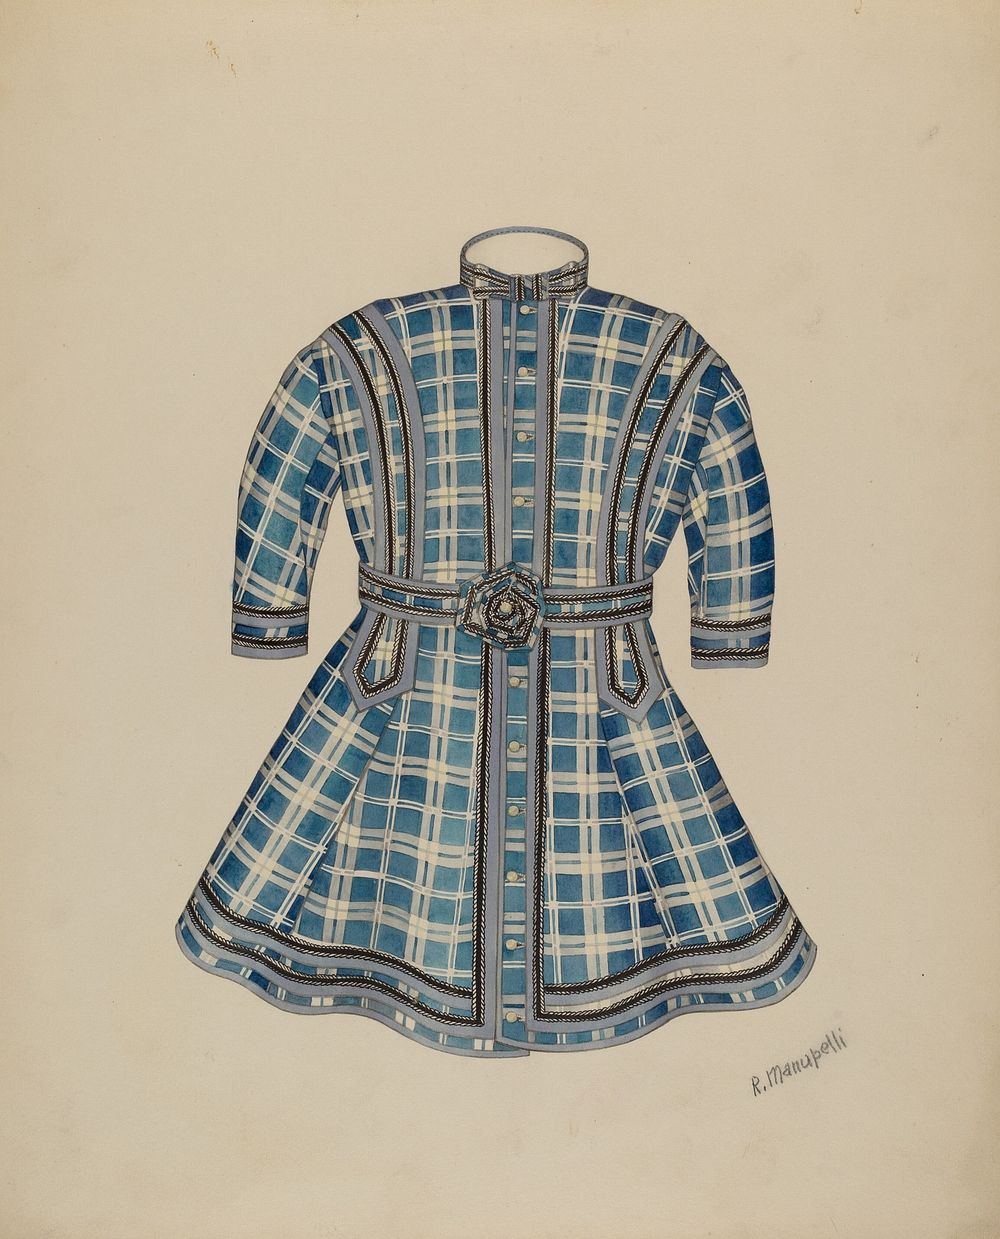 Child's Dress (c. 1938) by Raymond Manupelli.  